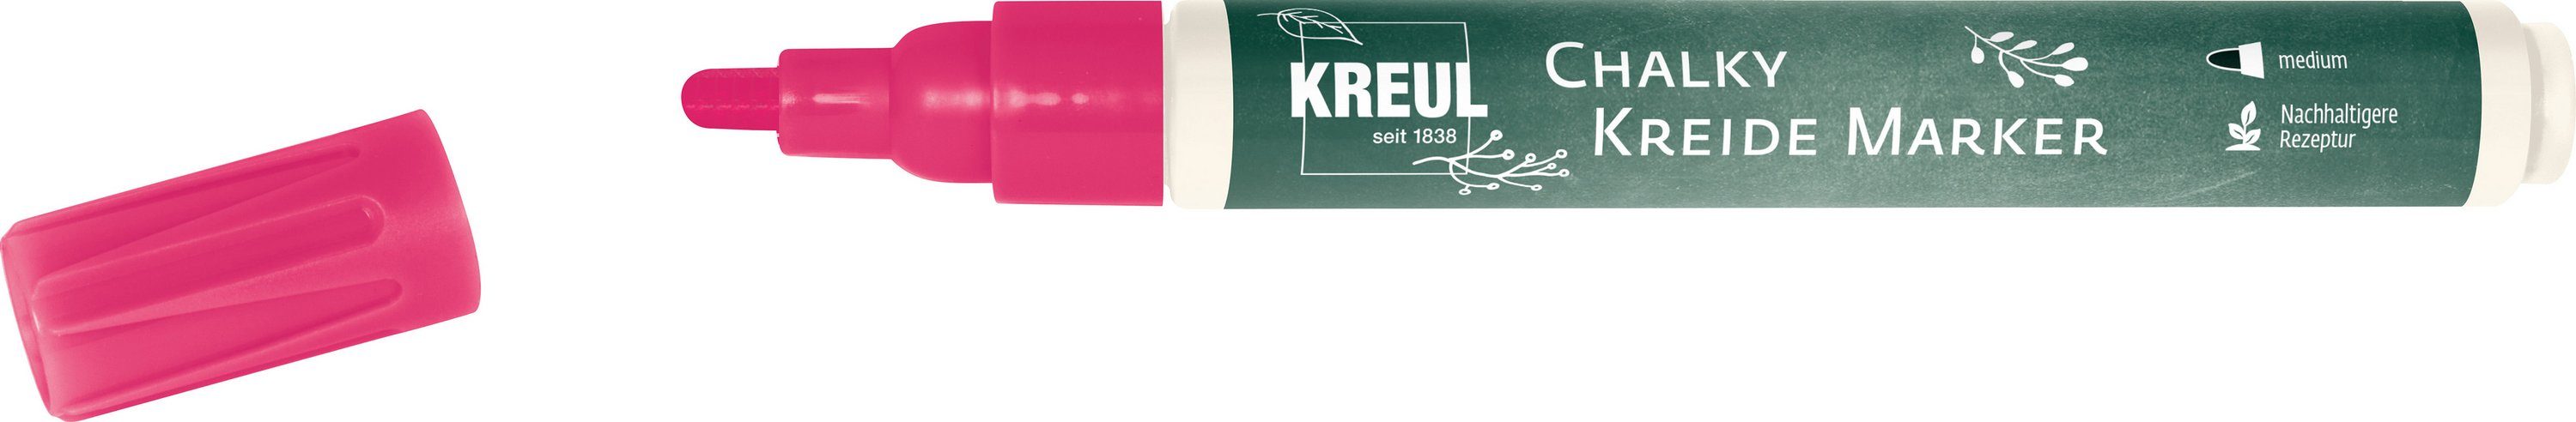 Kreul Strichstärke Neon-Pink 2-3mm Chalky, Kreidemarker